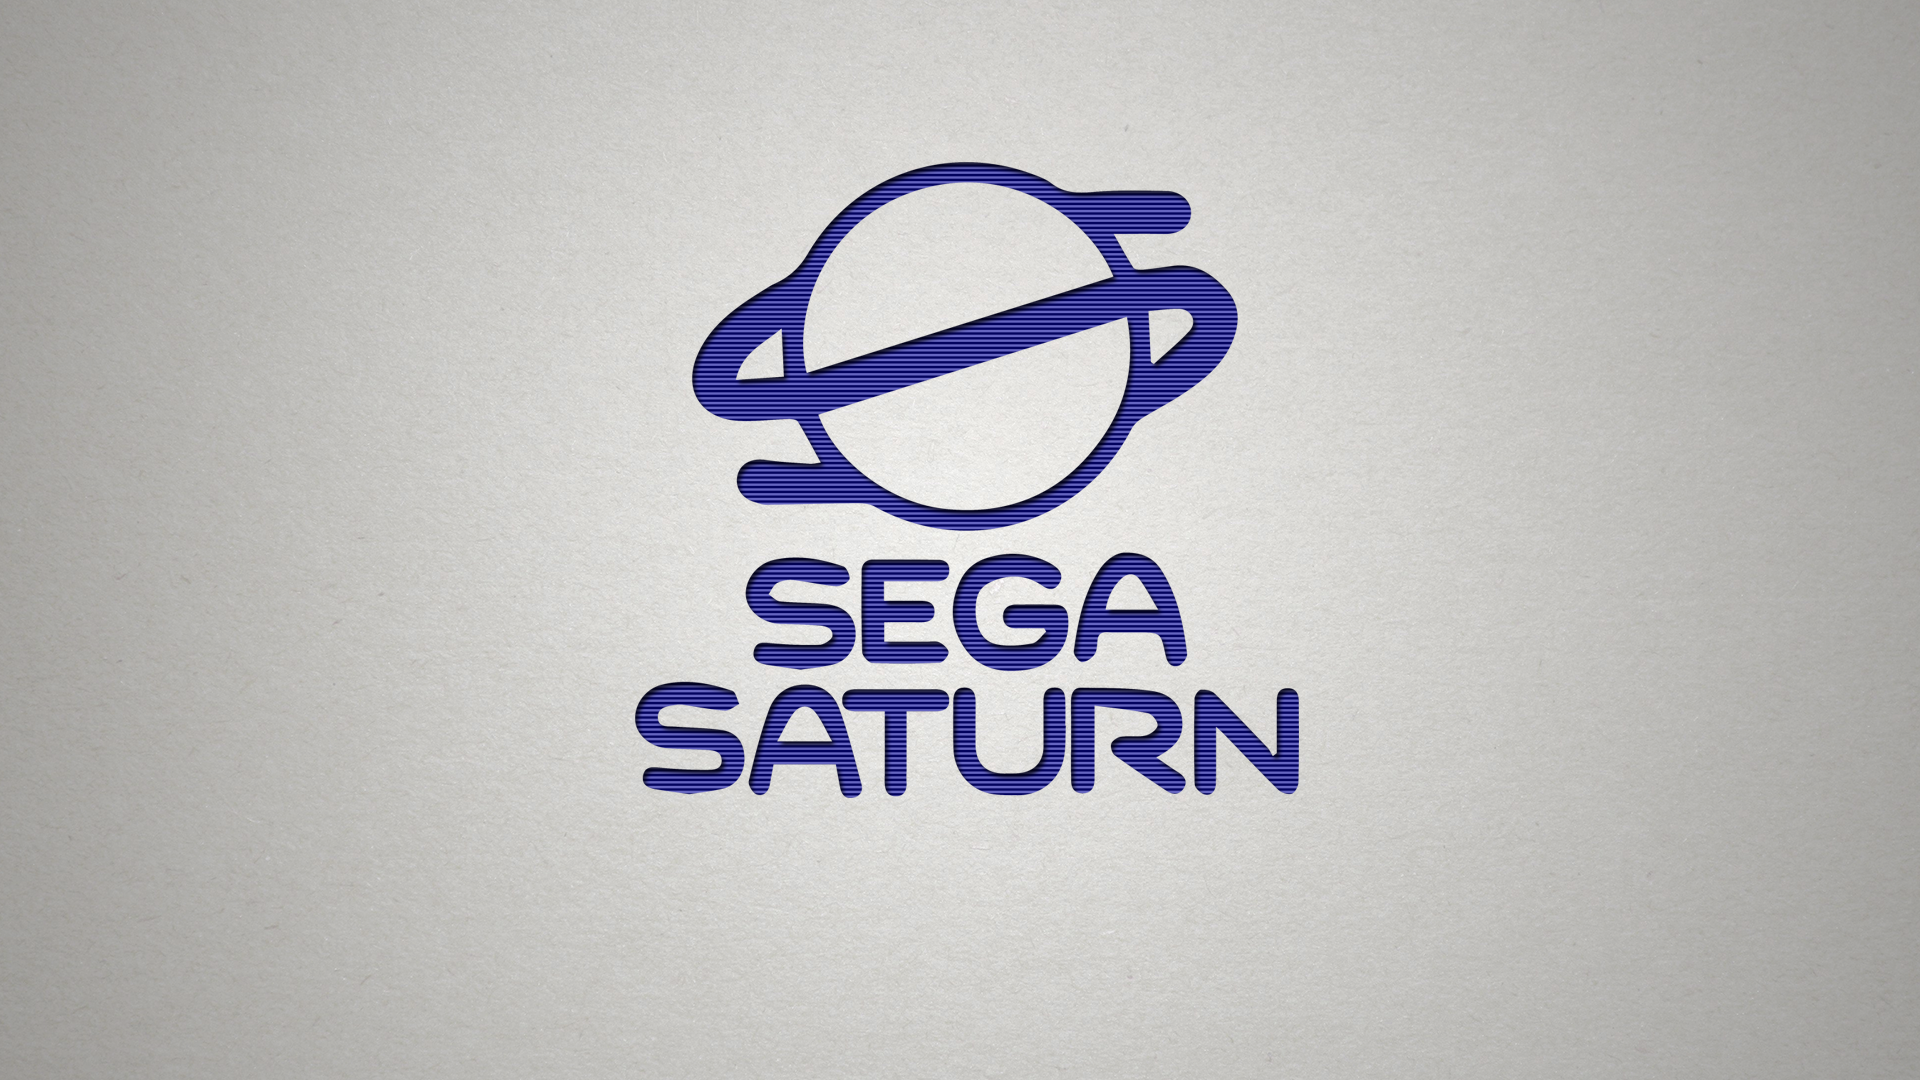 SEGA Saturn HD Wallpaper and Background Image